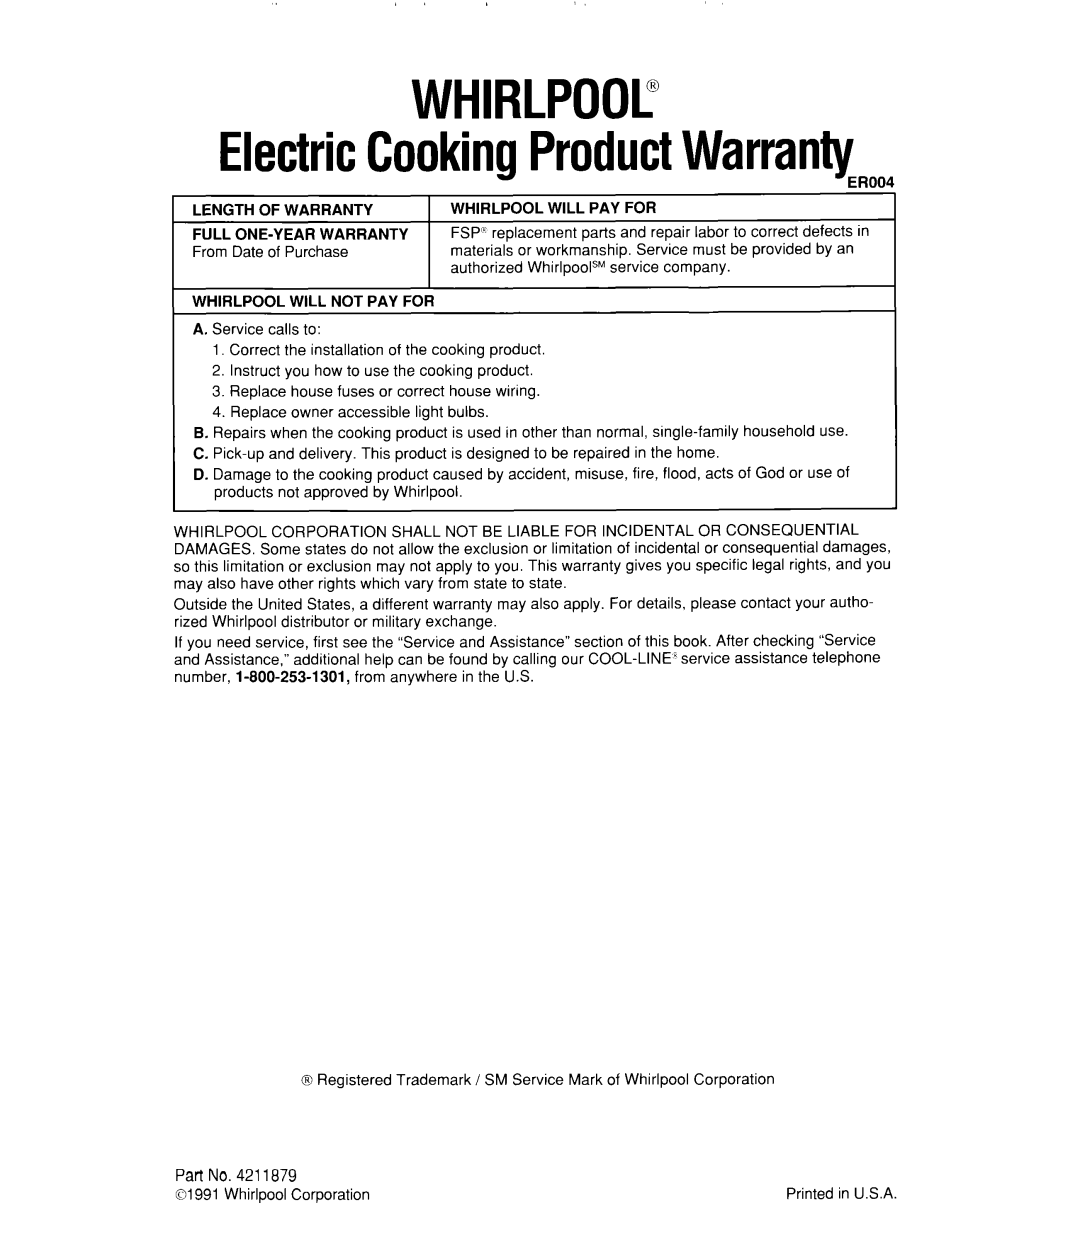 Whirlpool RC8330XT manual WHIRLPOOr ElectricCookingProductWarranty, Part No 